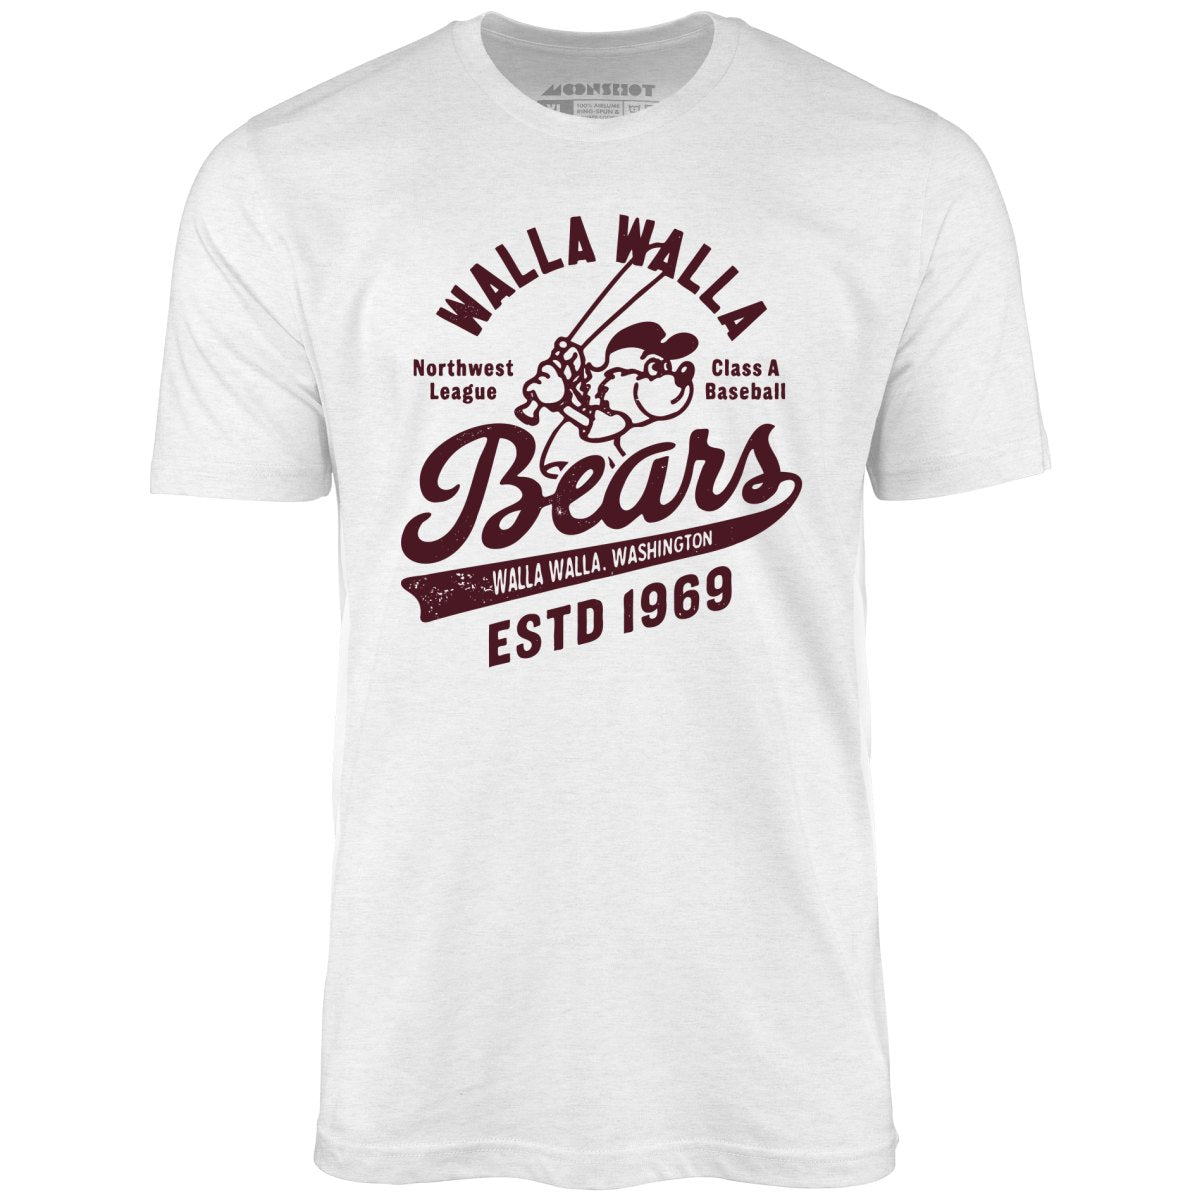 Walla Walla Bears - Washington - Vintage Defunct Baseball Teams - Unisex T-Shirt